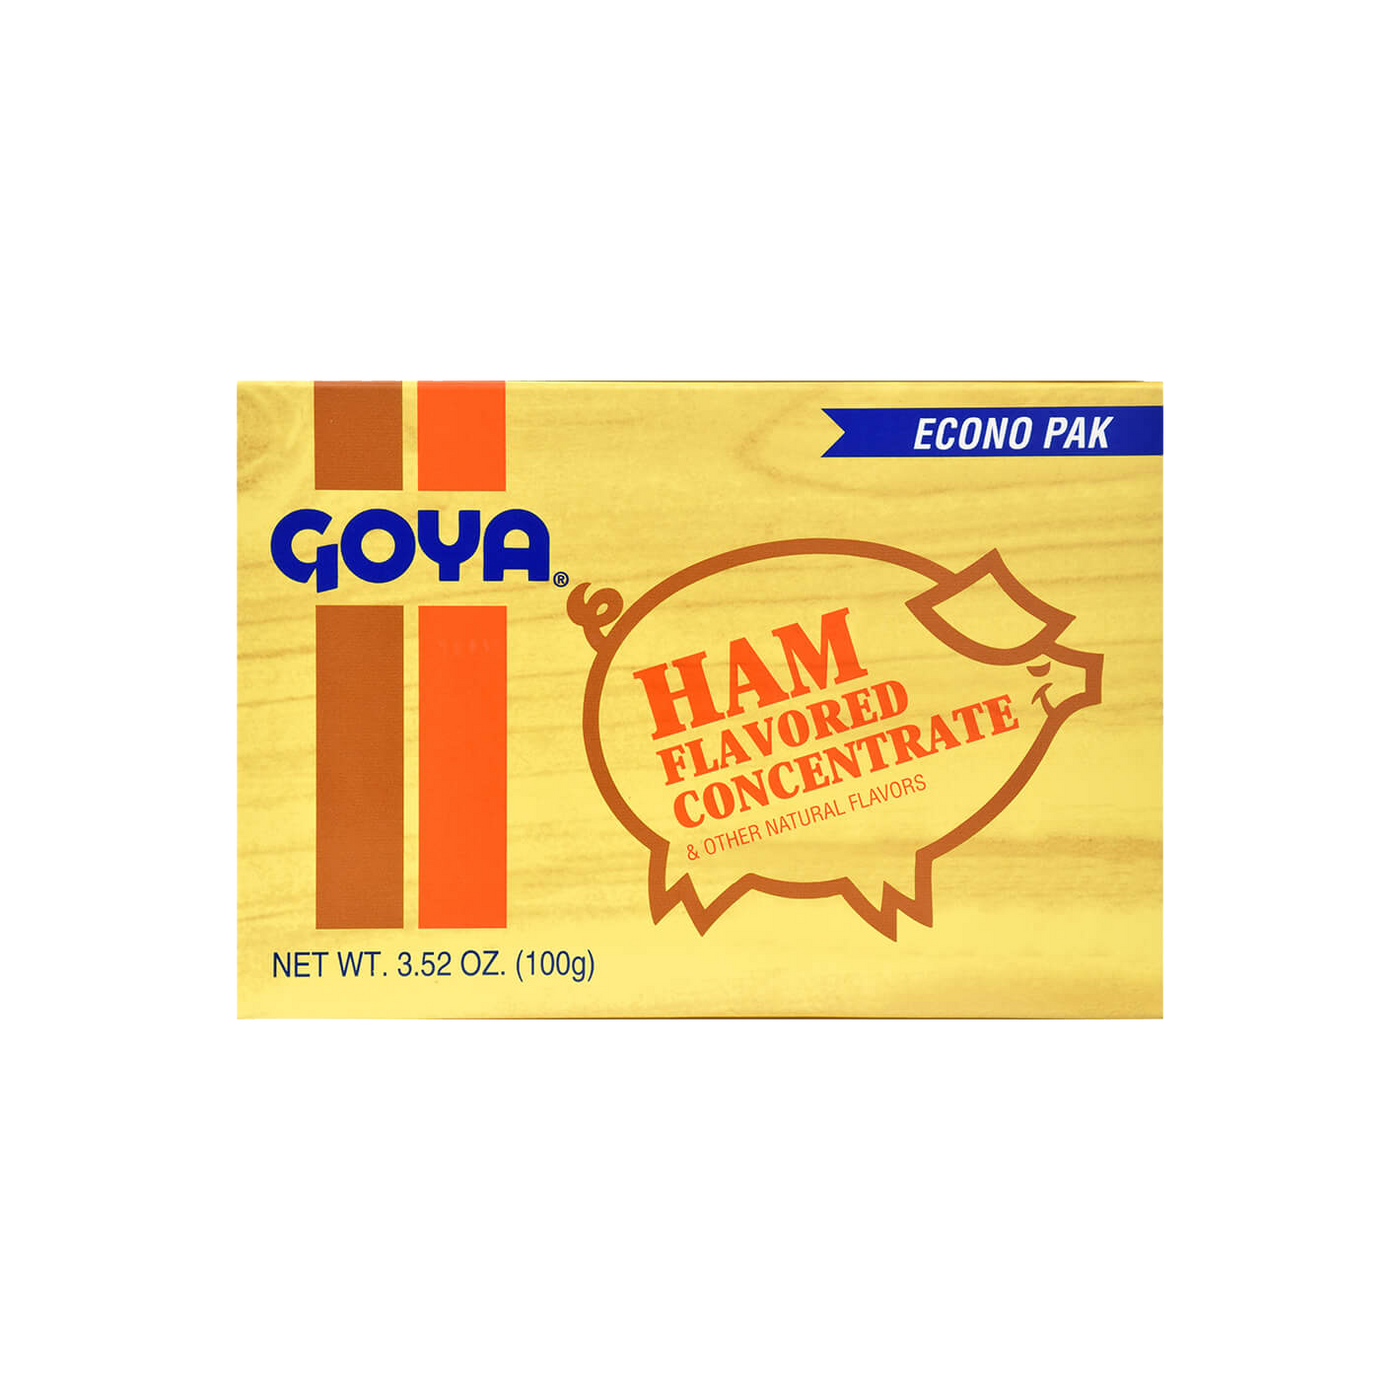 Goya Ham Flavored Concentrated Seasoning 1.41oz